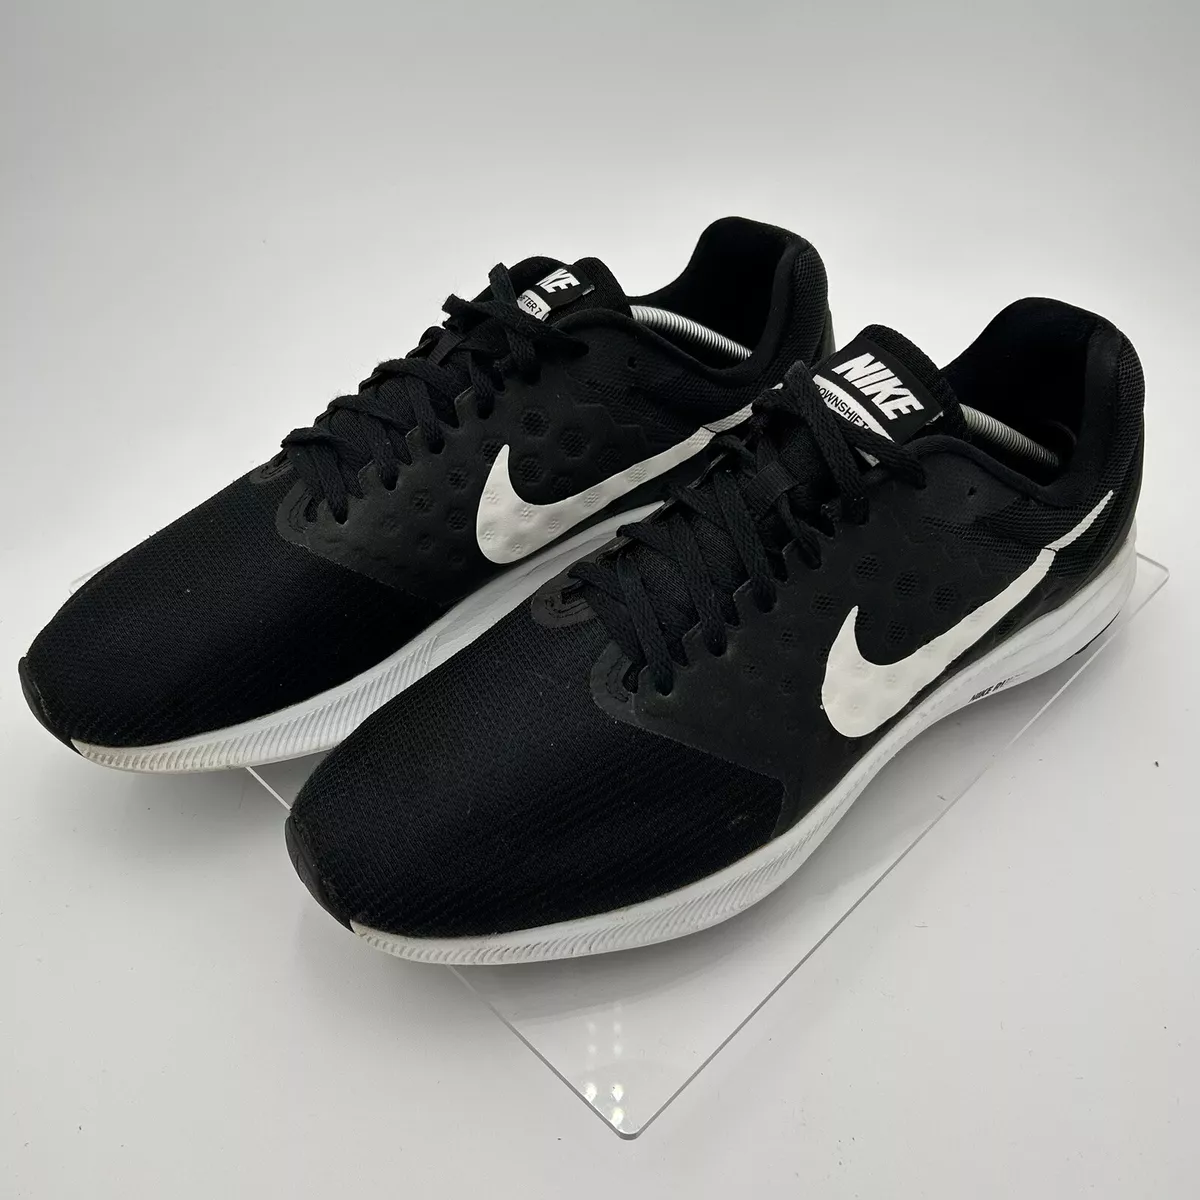 Nike 7 Mens Size 12 Black &amp; White Shoes Sneakers 852459-002 eBay